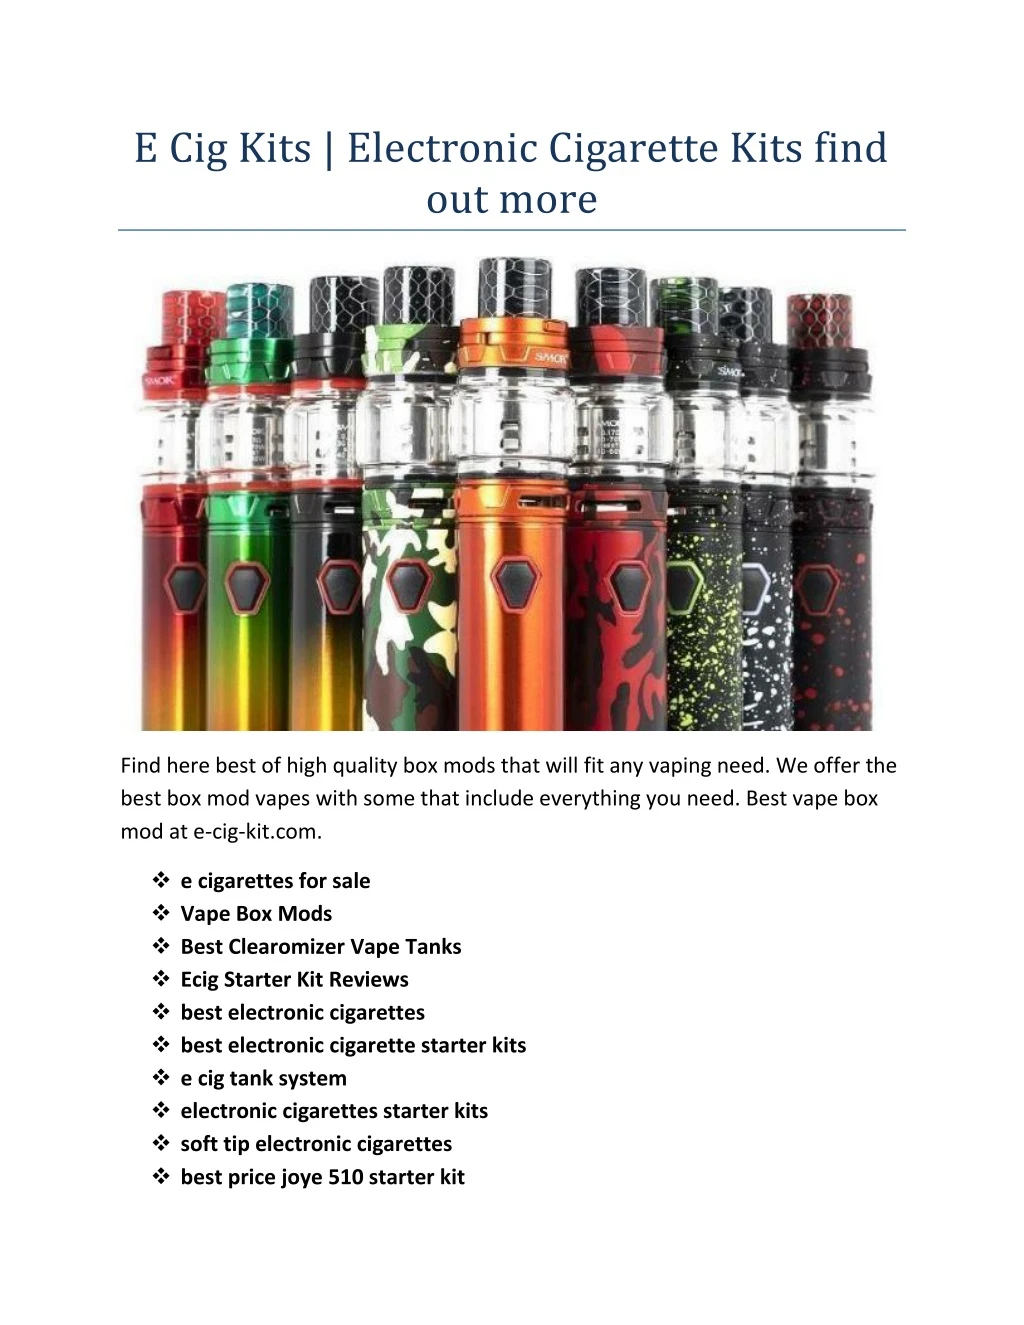 e cig kits electronic cigarette kits find out more